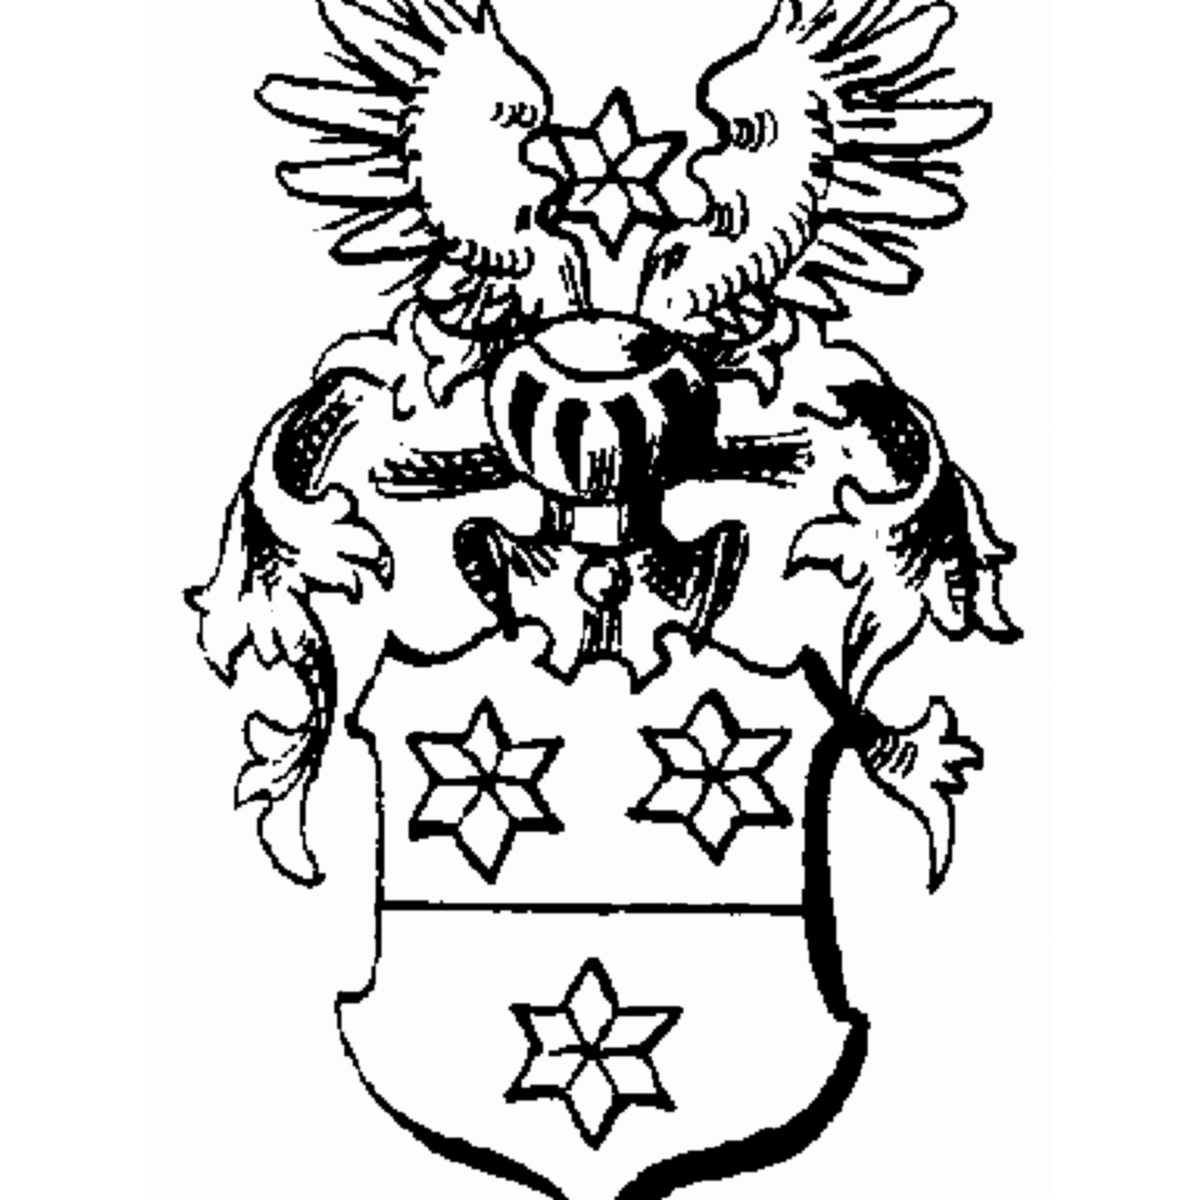 Wappen der Familie Parillenmacher